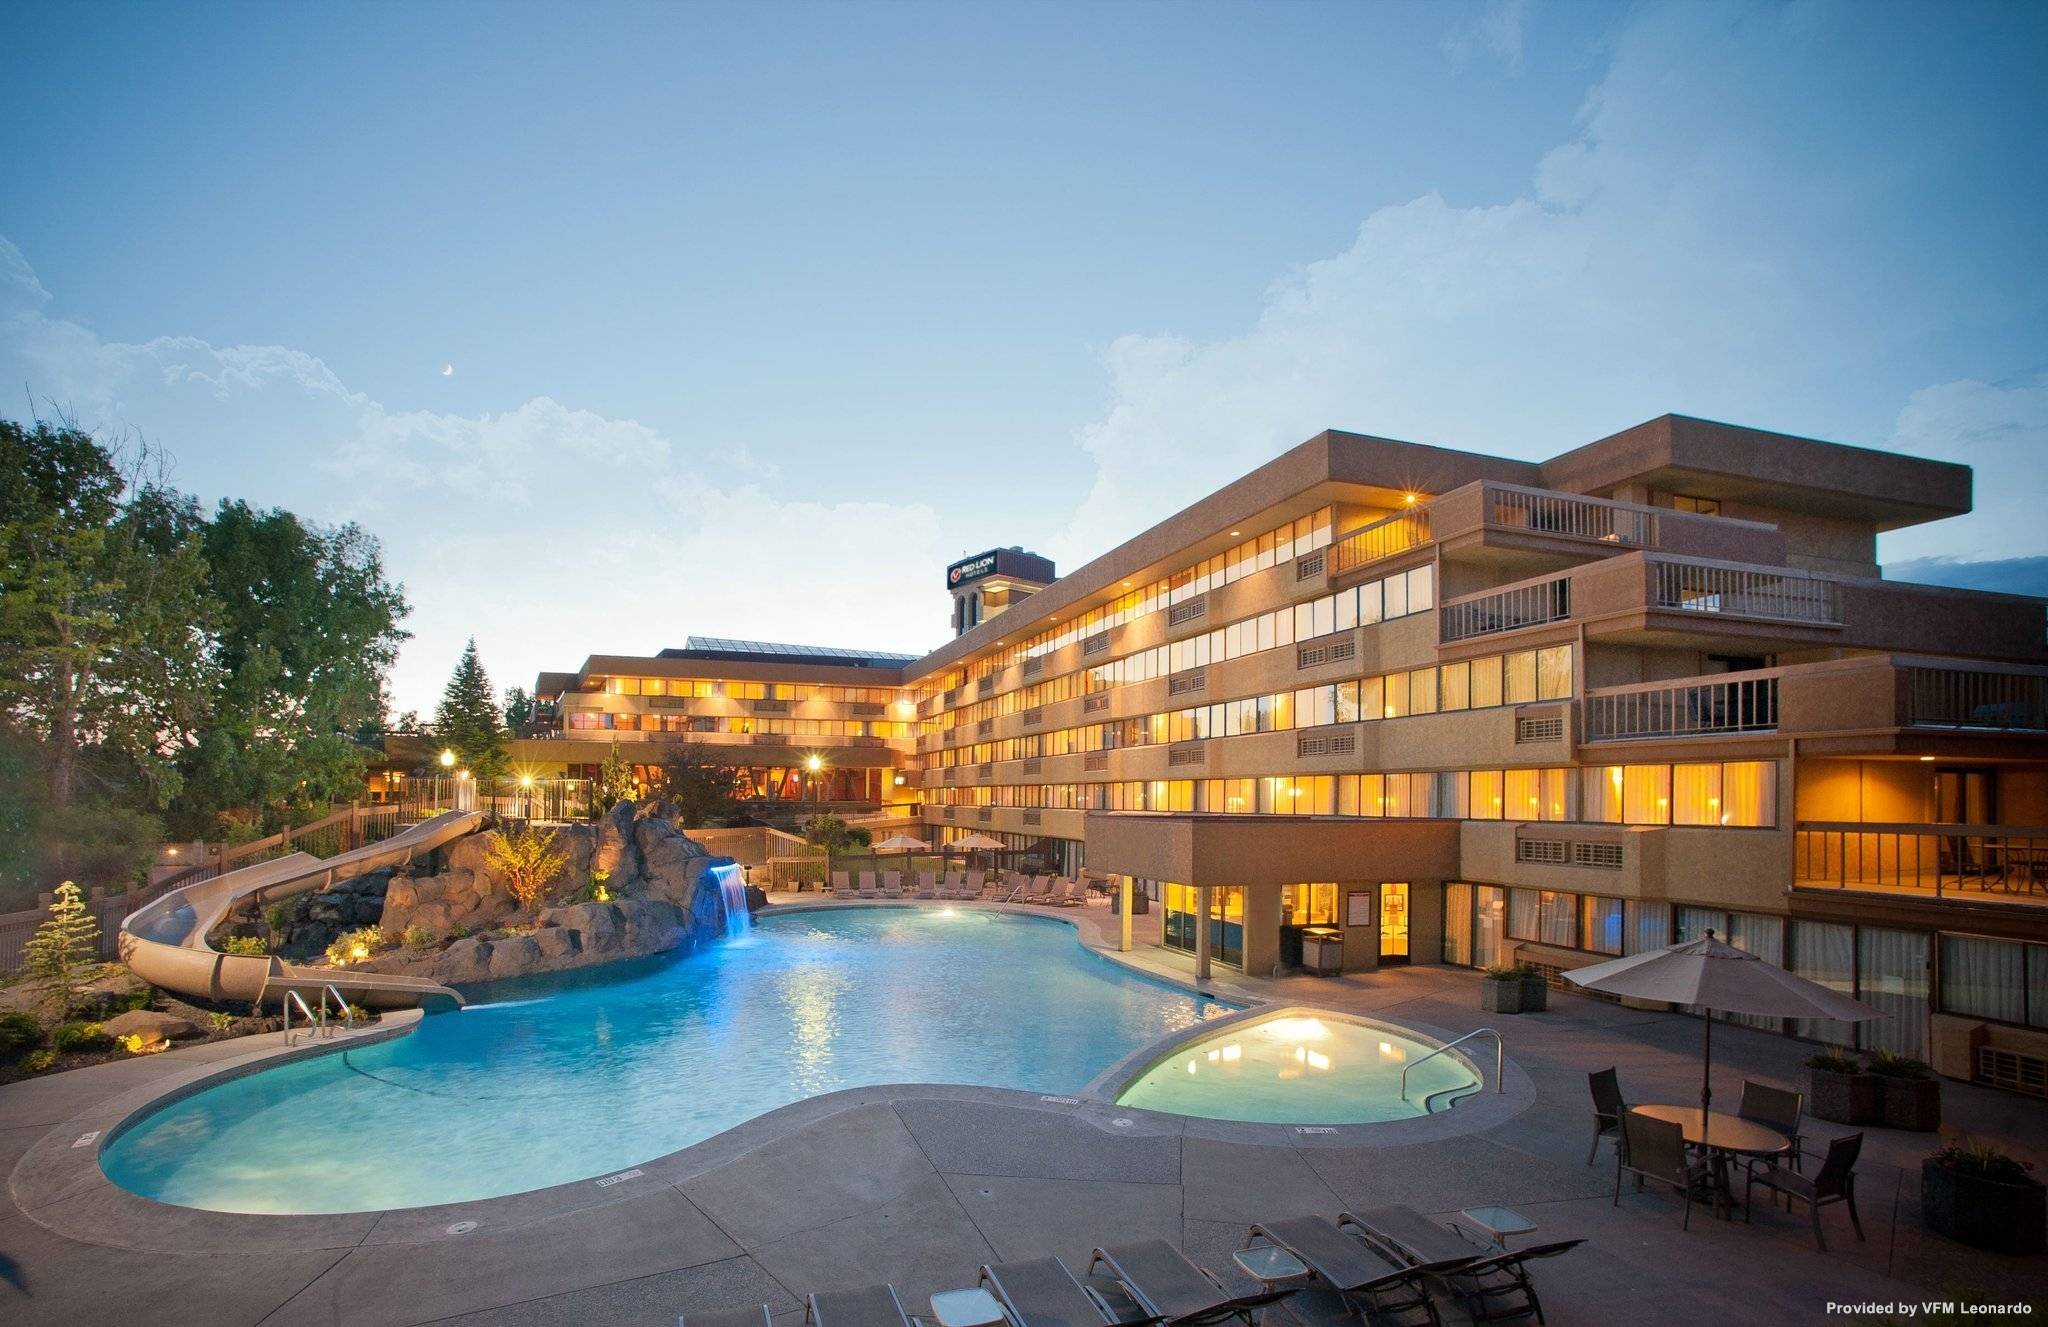 The Centennial Hotel Spokane In Spokane Washington Hrs